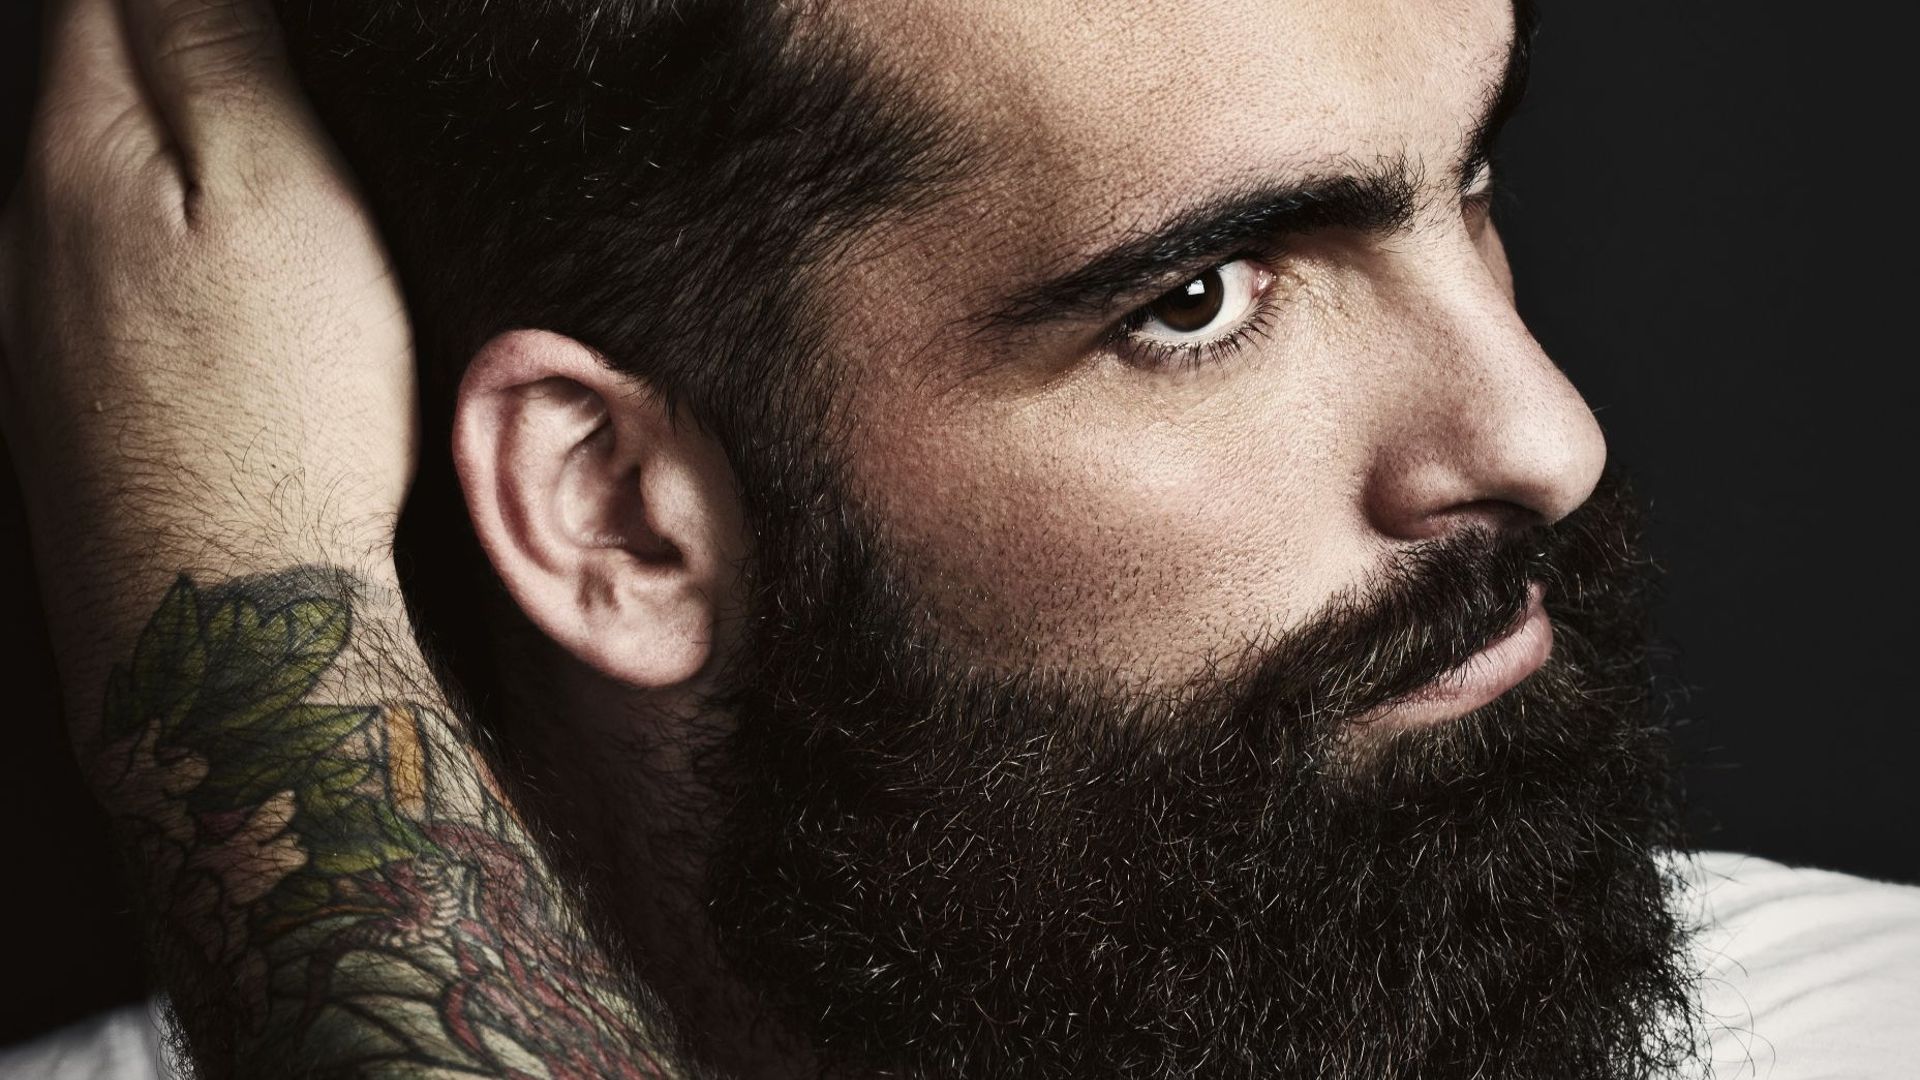 Portrait of brutal bearded man - Stock Image